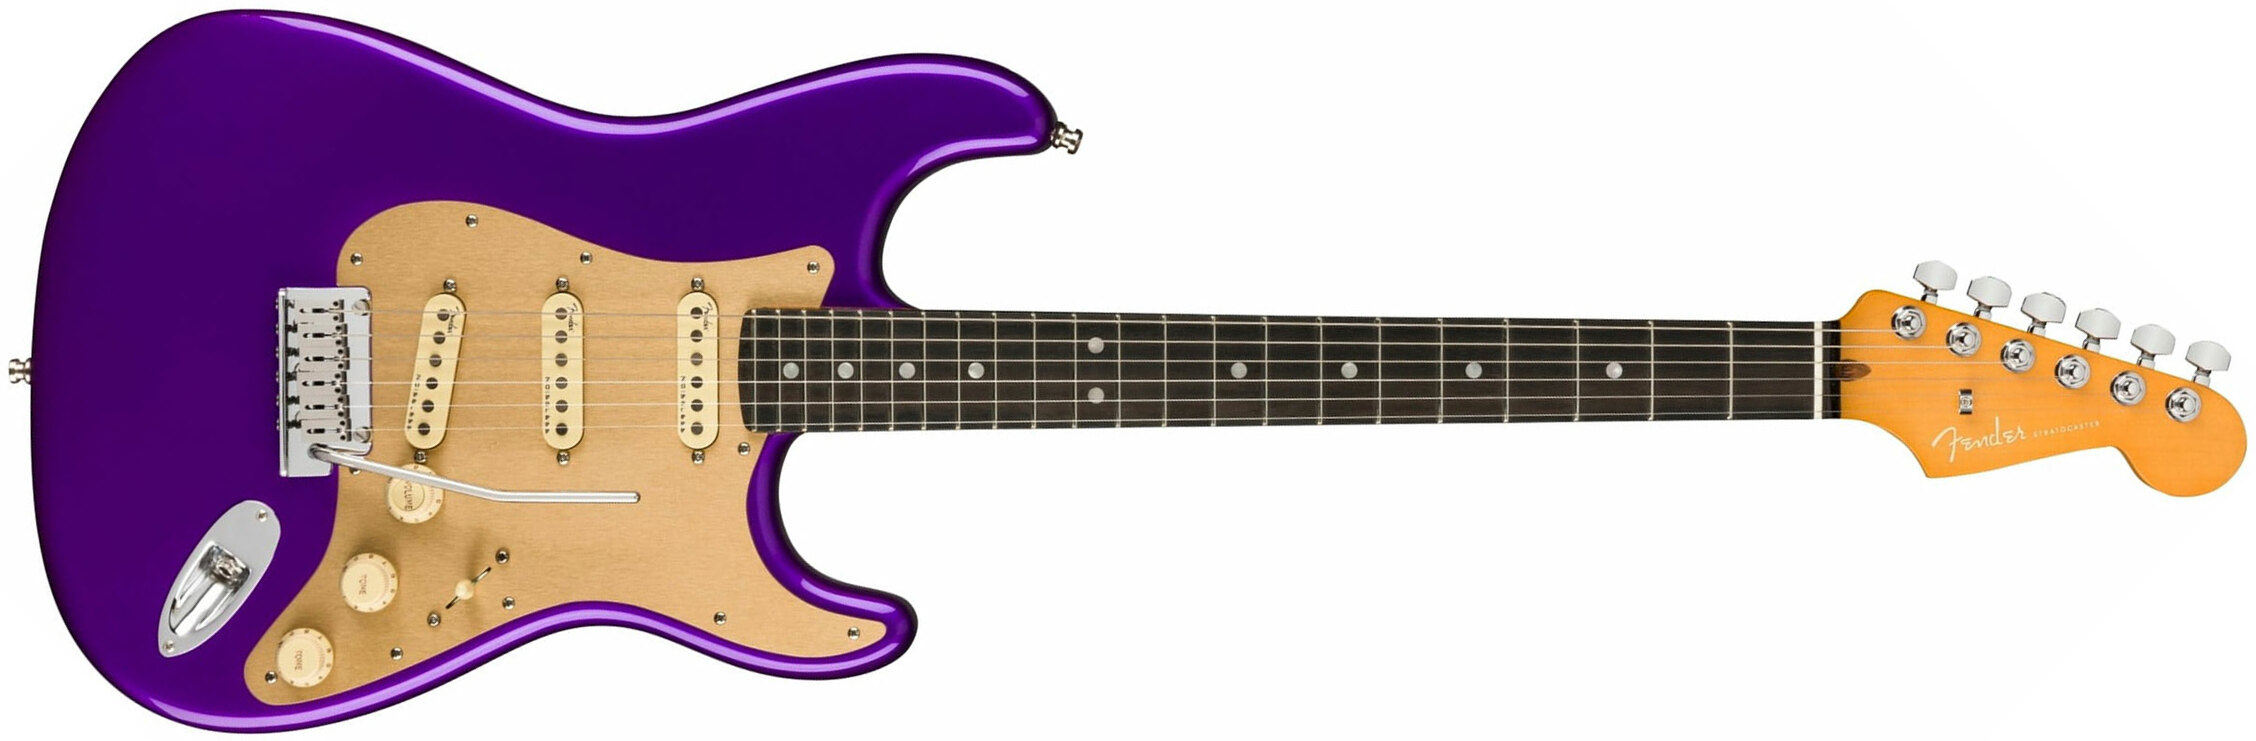 Fender Strat American Ultra Ltd Usa 3s Trem Eb - Plum Metallic - Str shape electric guitar - Main picture